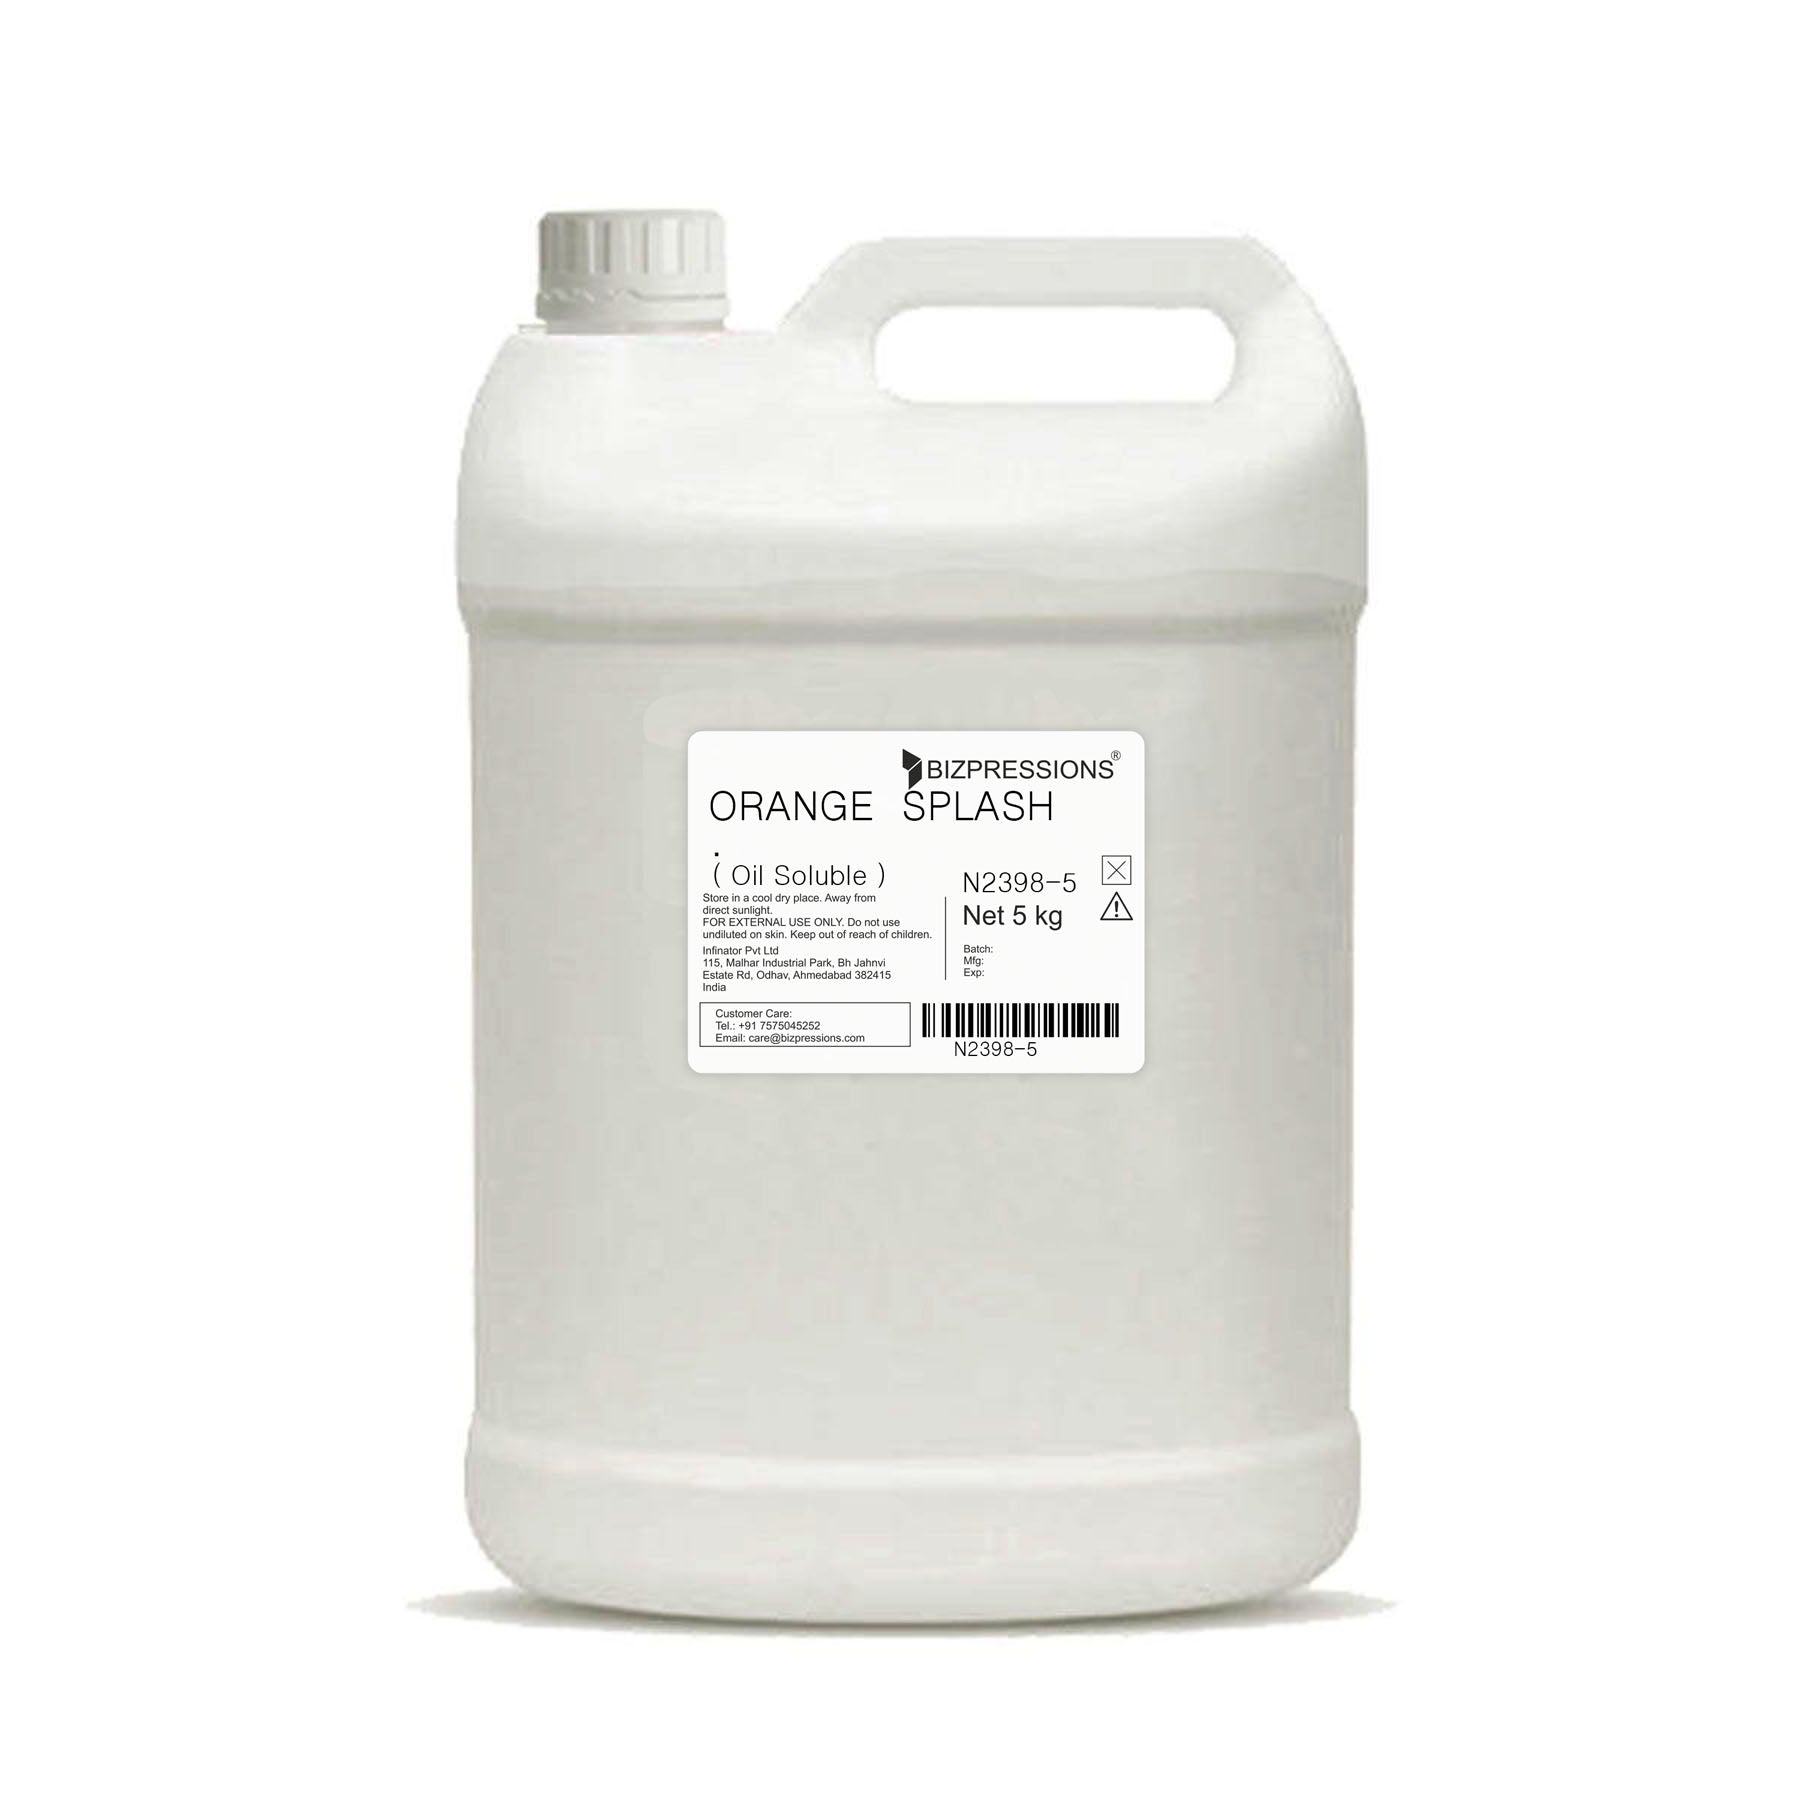 ORANGE SPLASH - Fragrance ( Oil Soluble ) - 5 kg